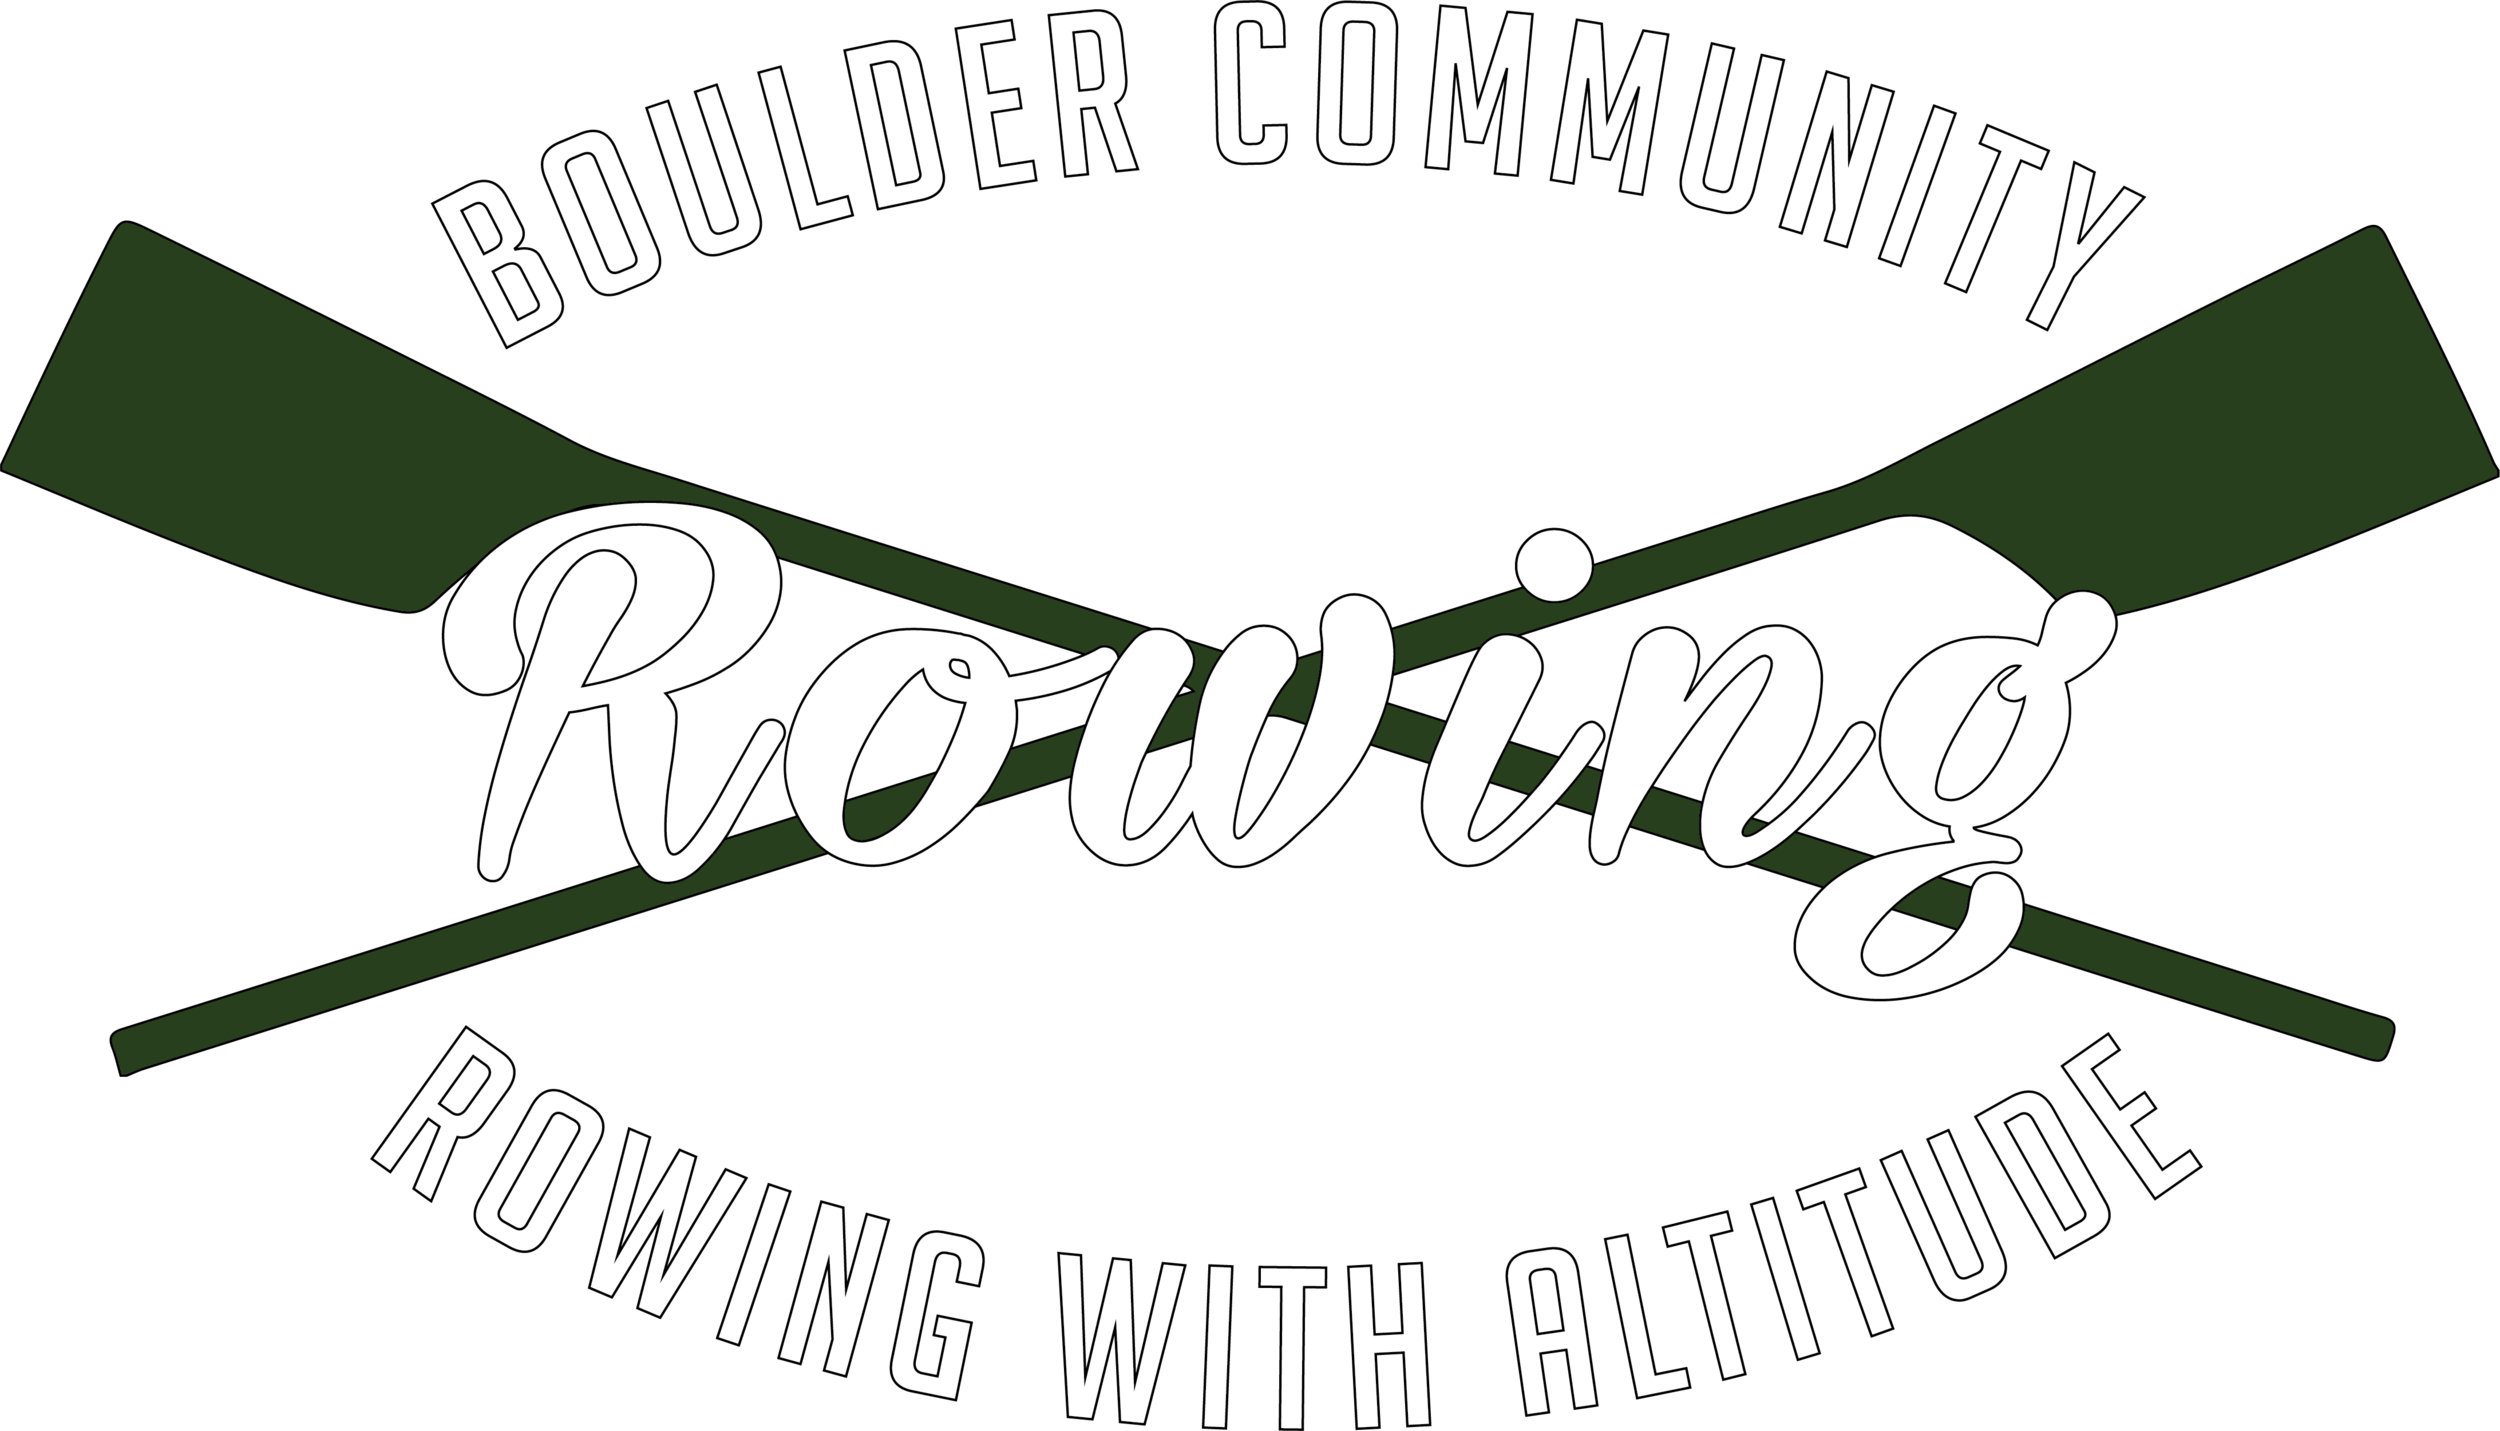 Boulder Community Rowing